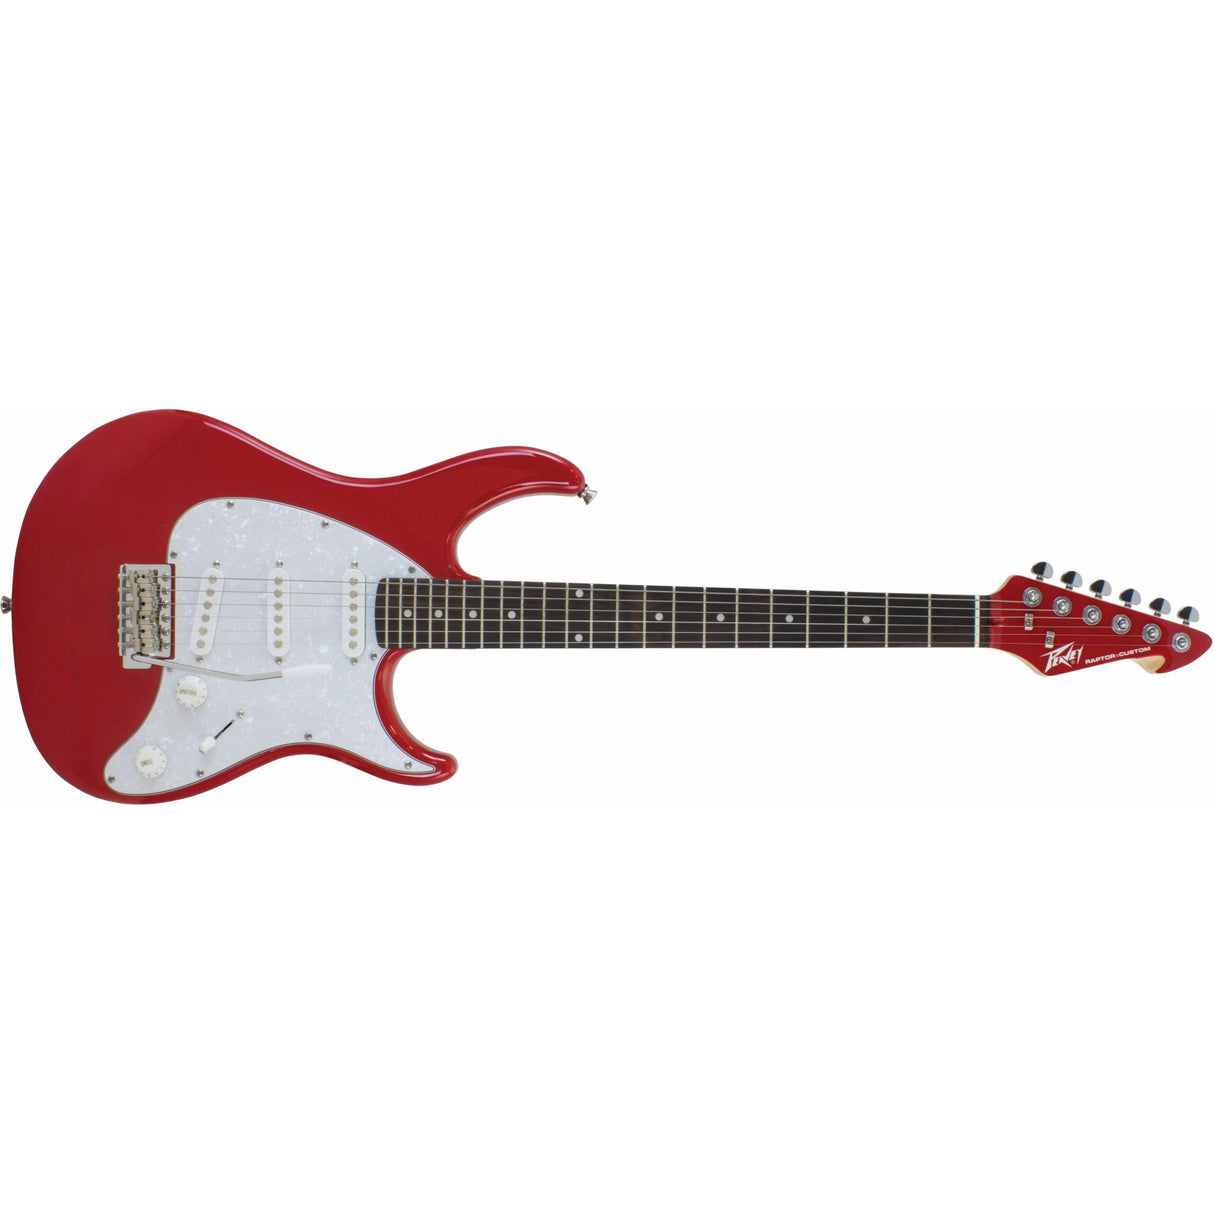 Peavey Raptor Custom Red Electric Guitar